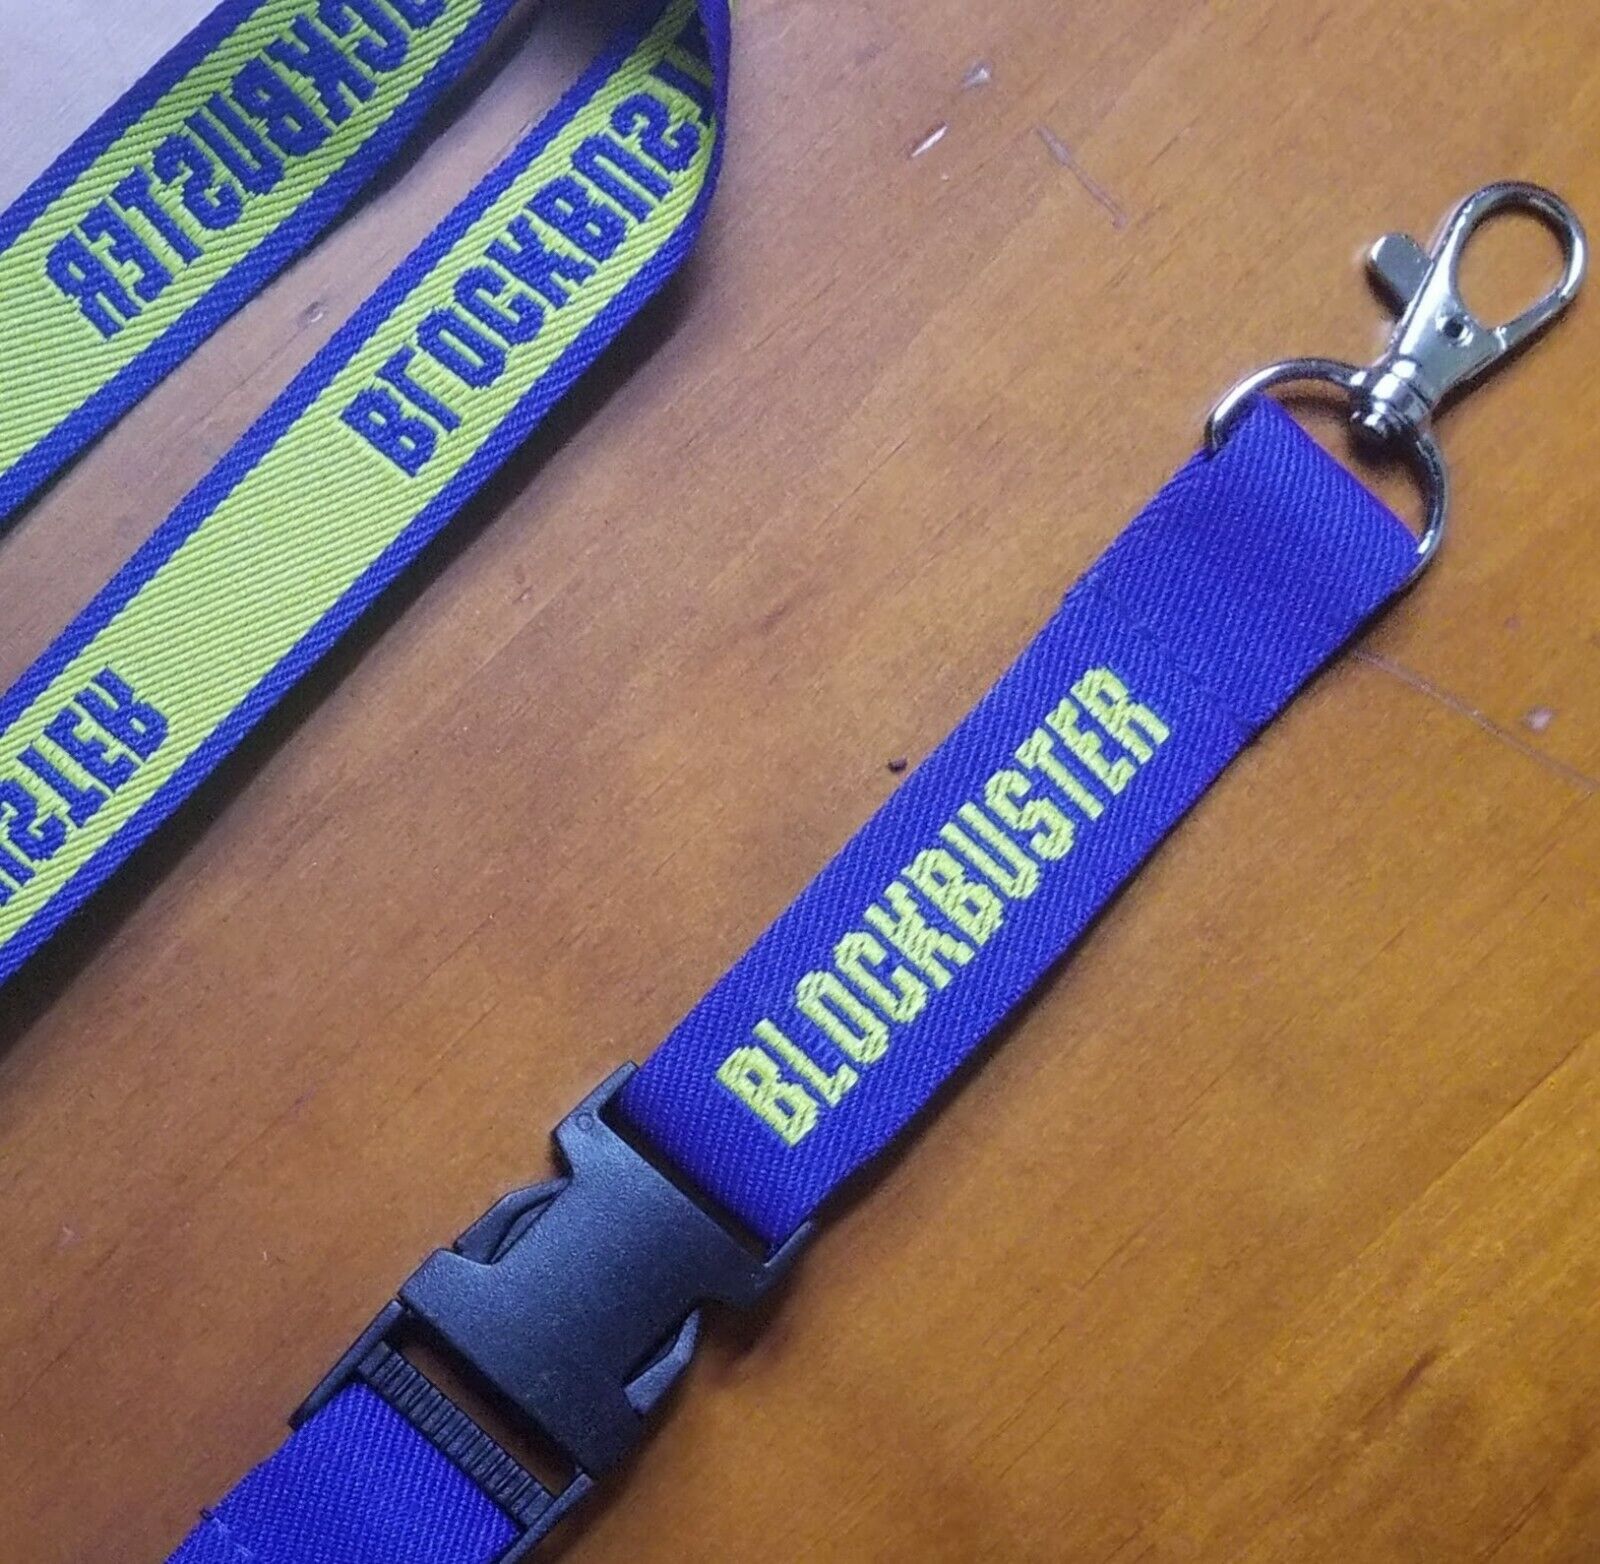 Lanyard Blockbuster Video 90s Retro Blue Yellow Keychain Necklace Key Holder